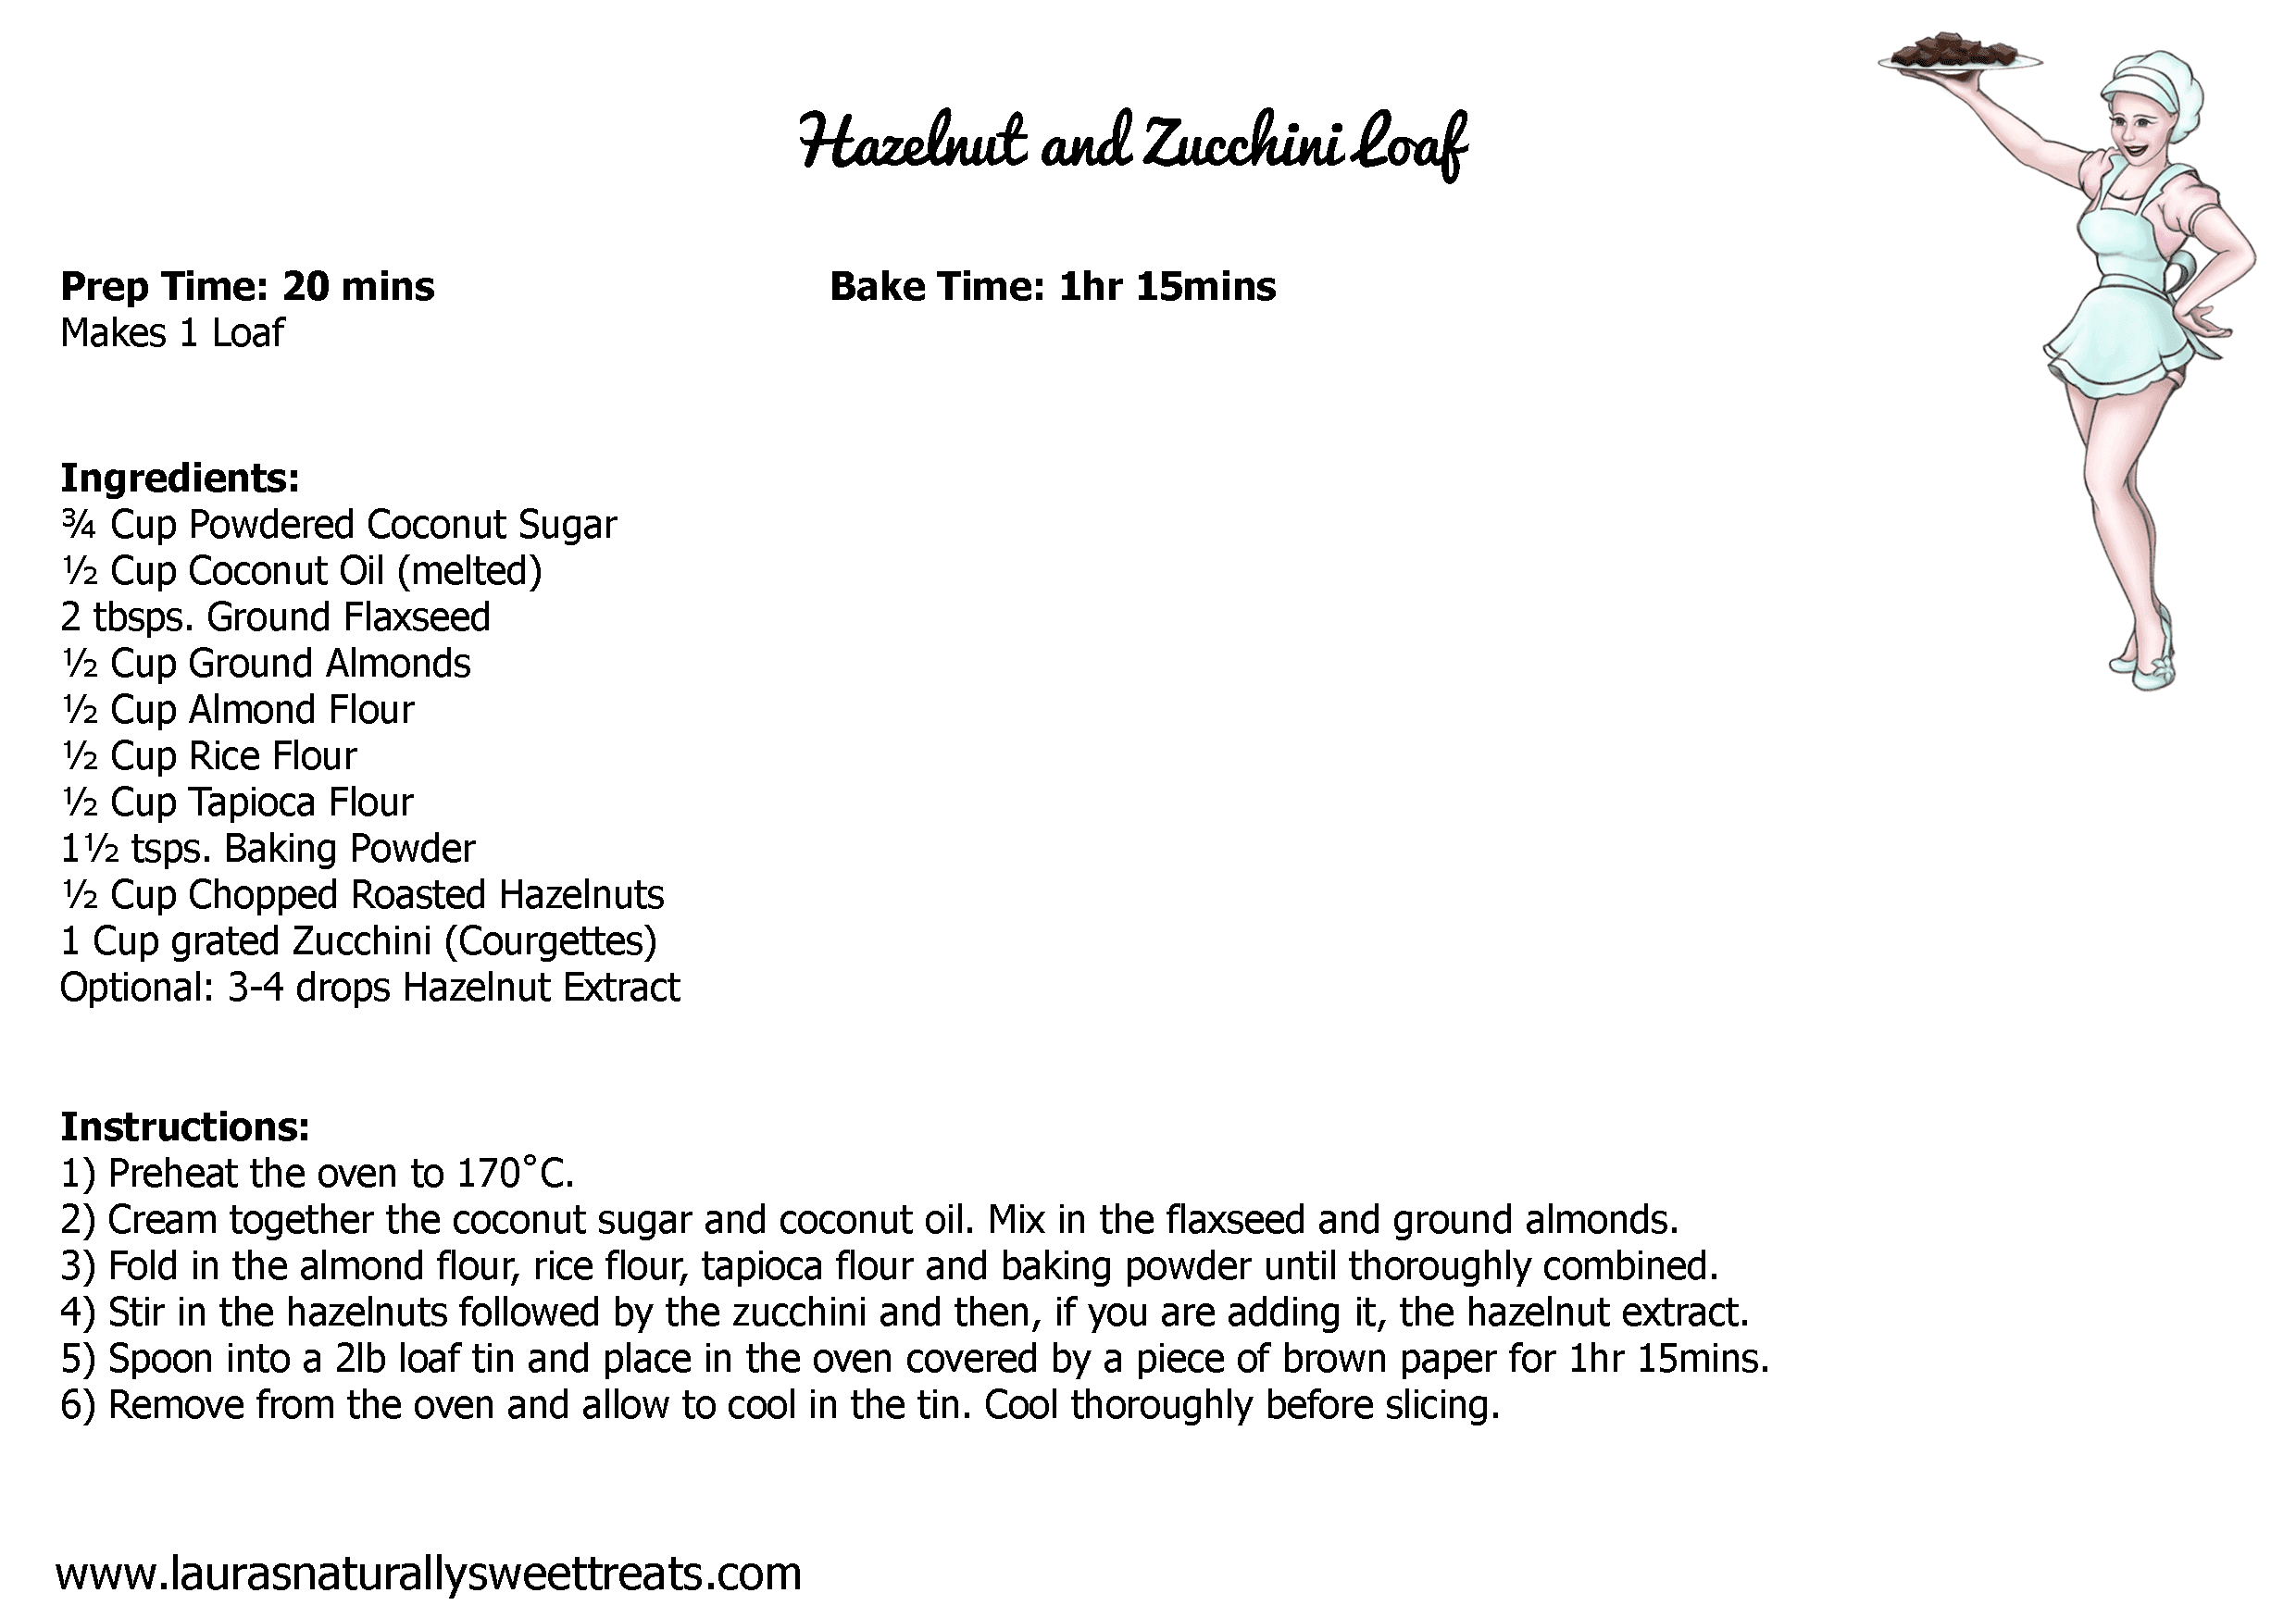 hazelnut and zucchini loaf recipe card